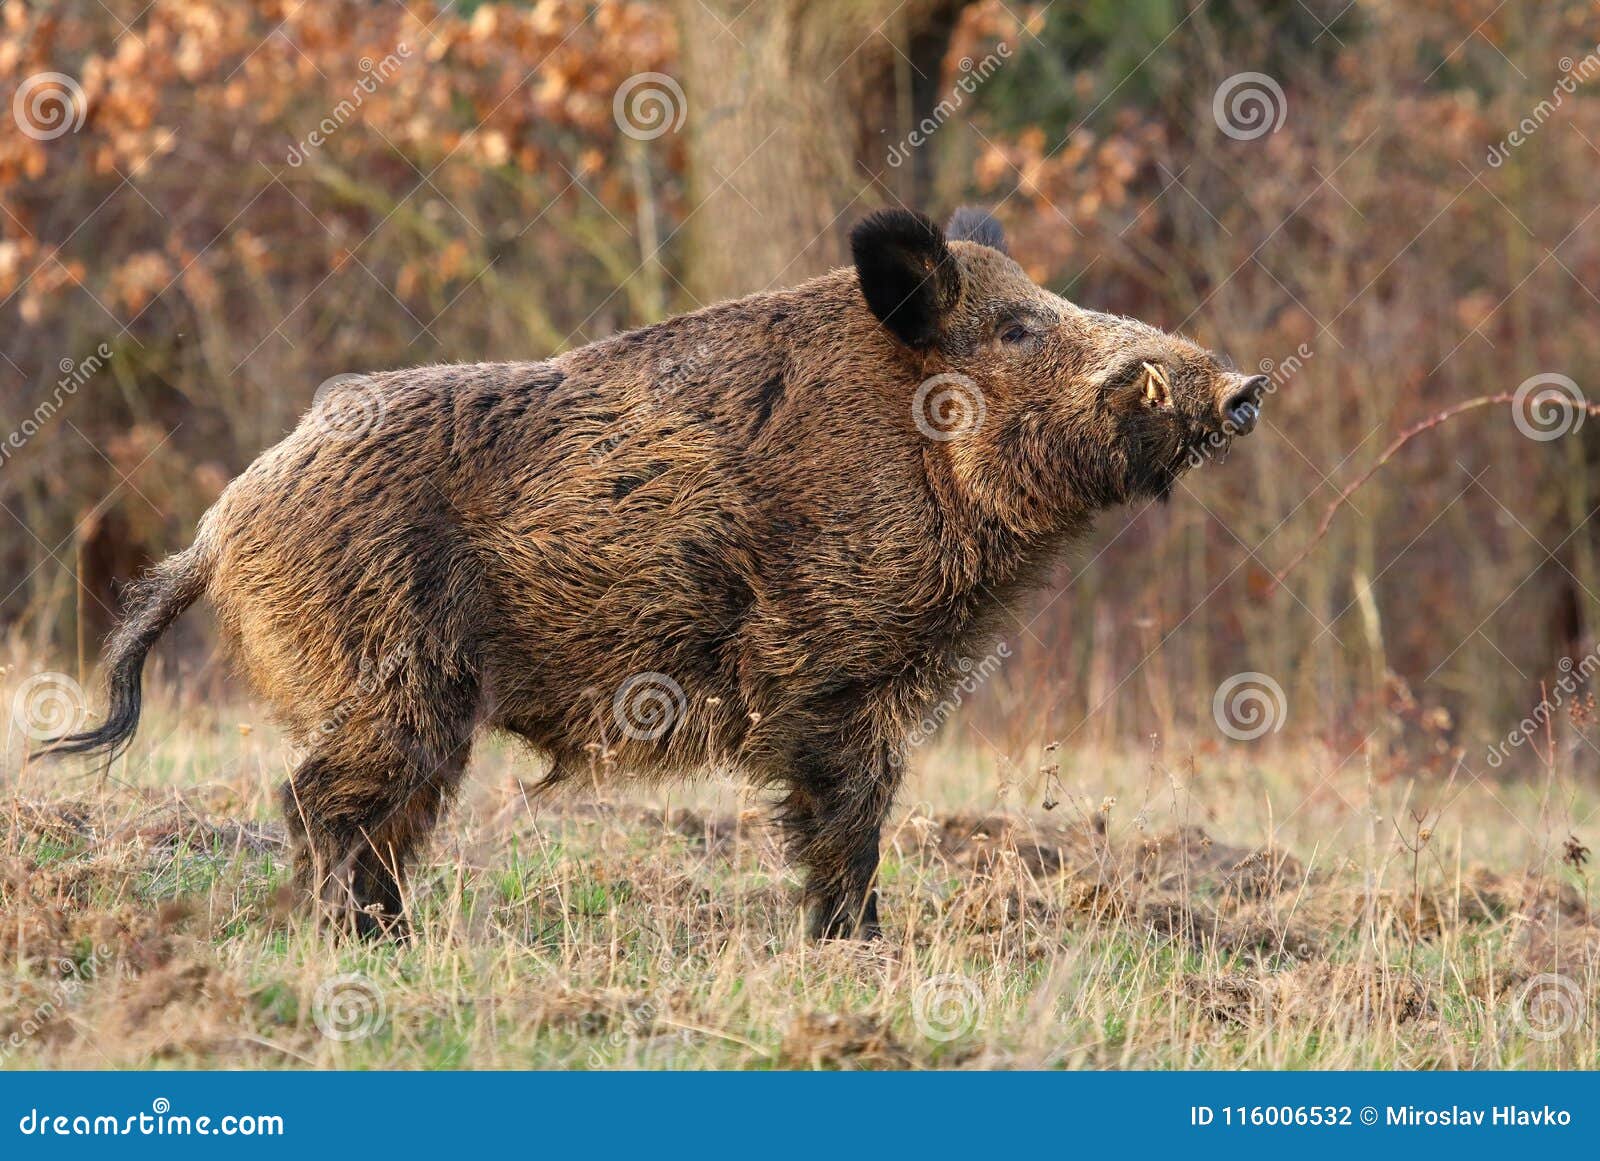 adult wild boar sus scrofa